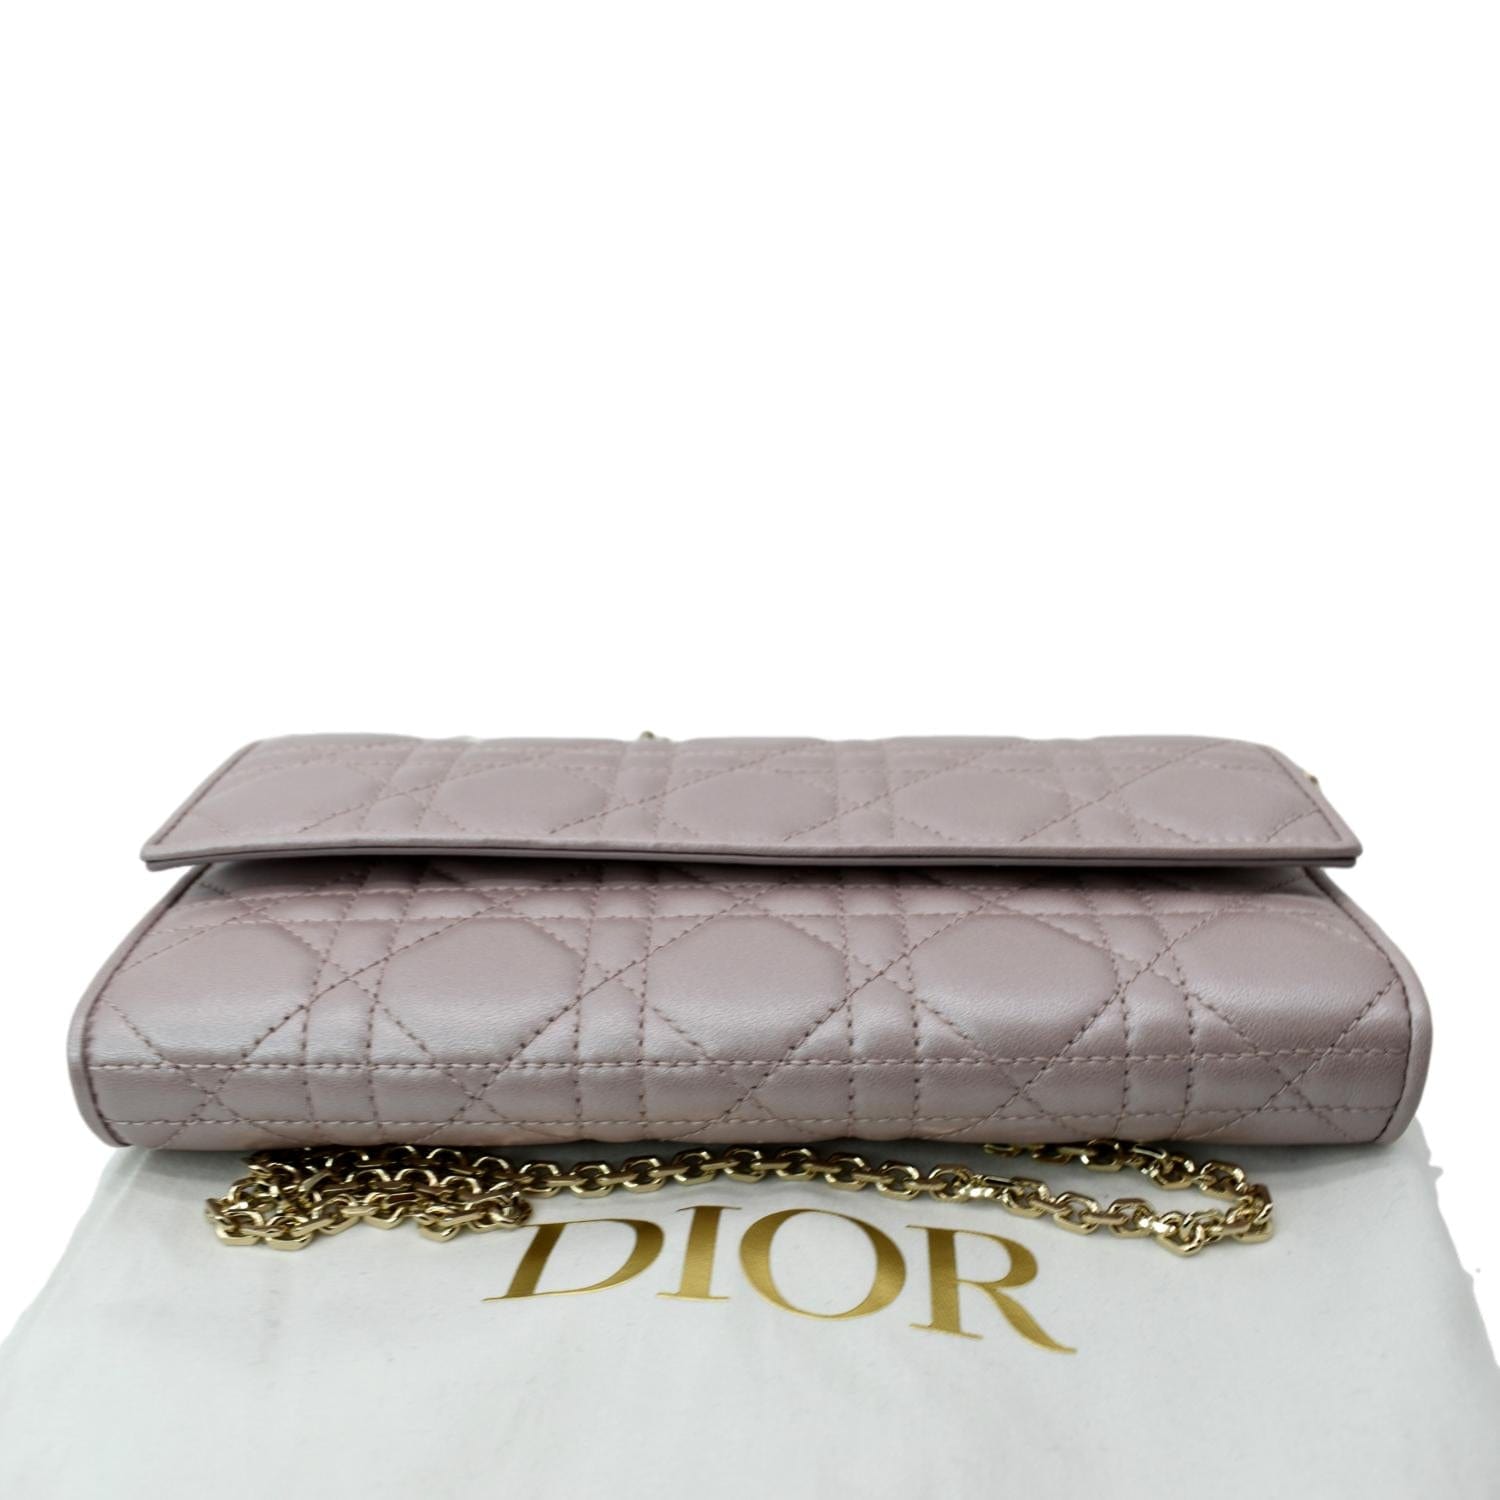 Dior wallet - متجر النخبة تقليد ماركات ماستر كوبي